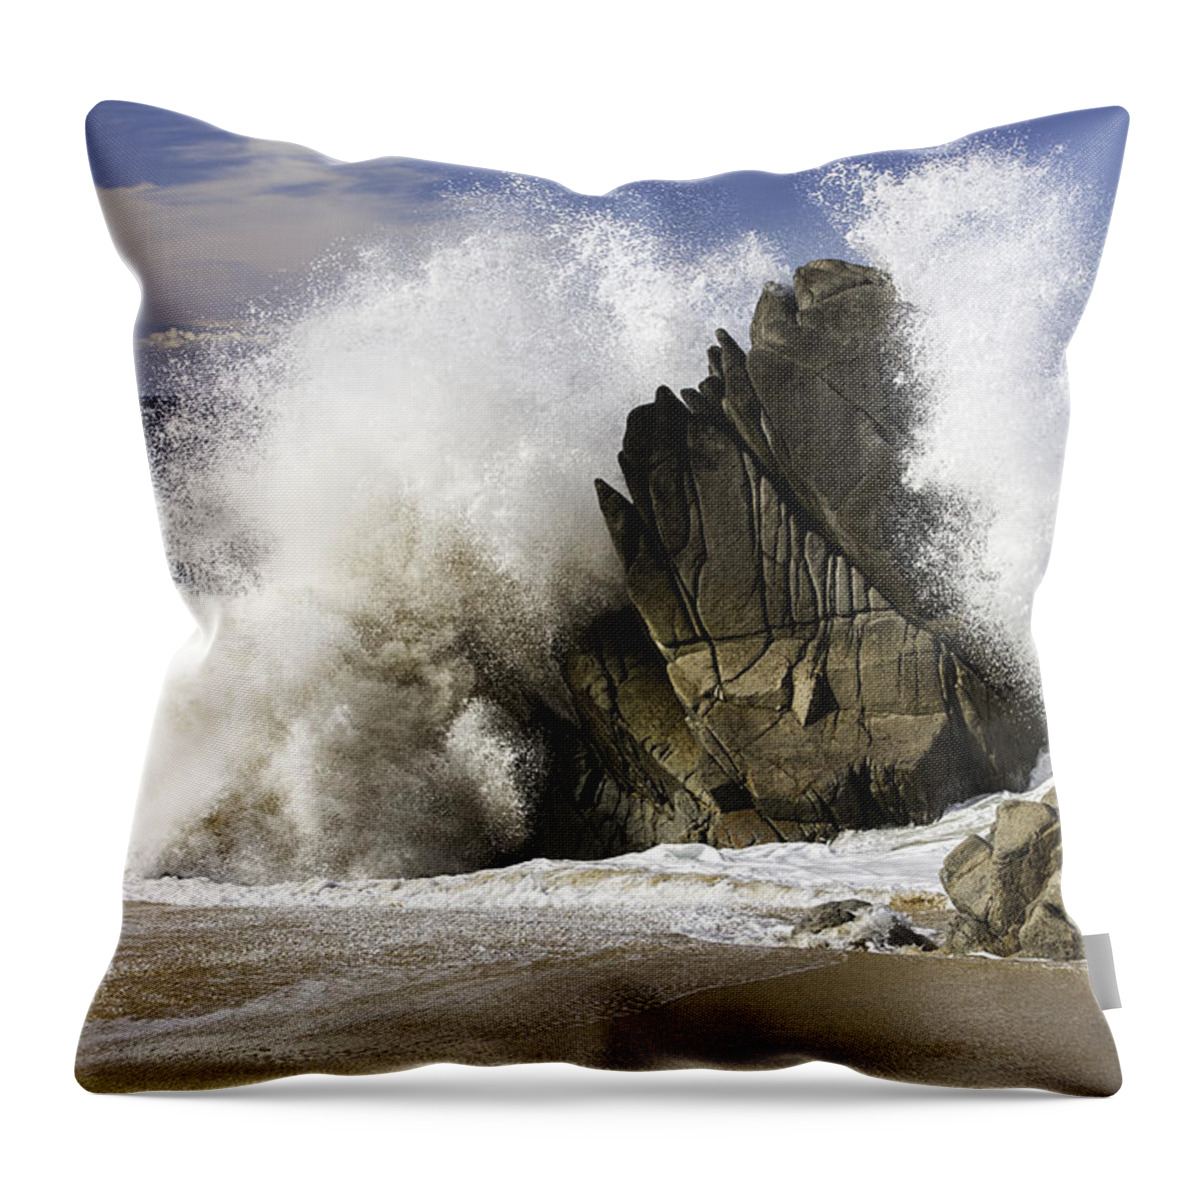 Ocean Throw Pillow featuring the photograph Crashing by Mark Harrington